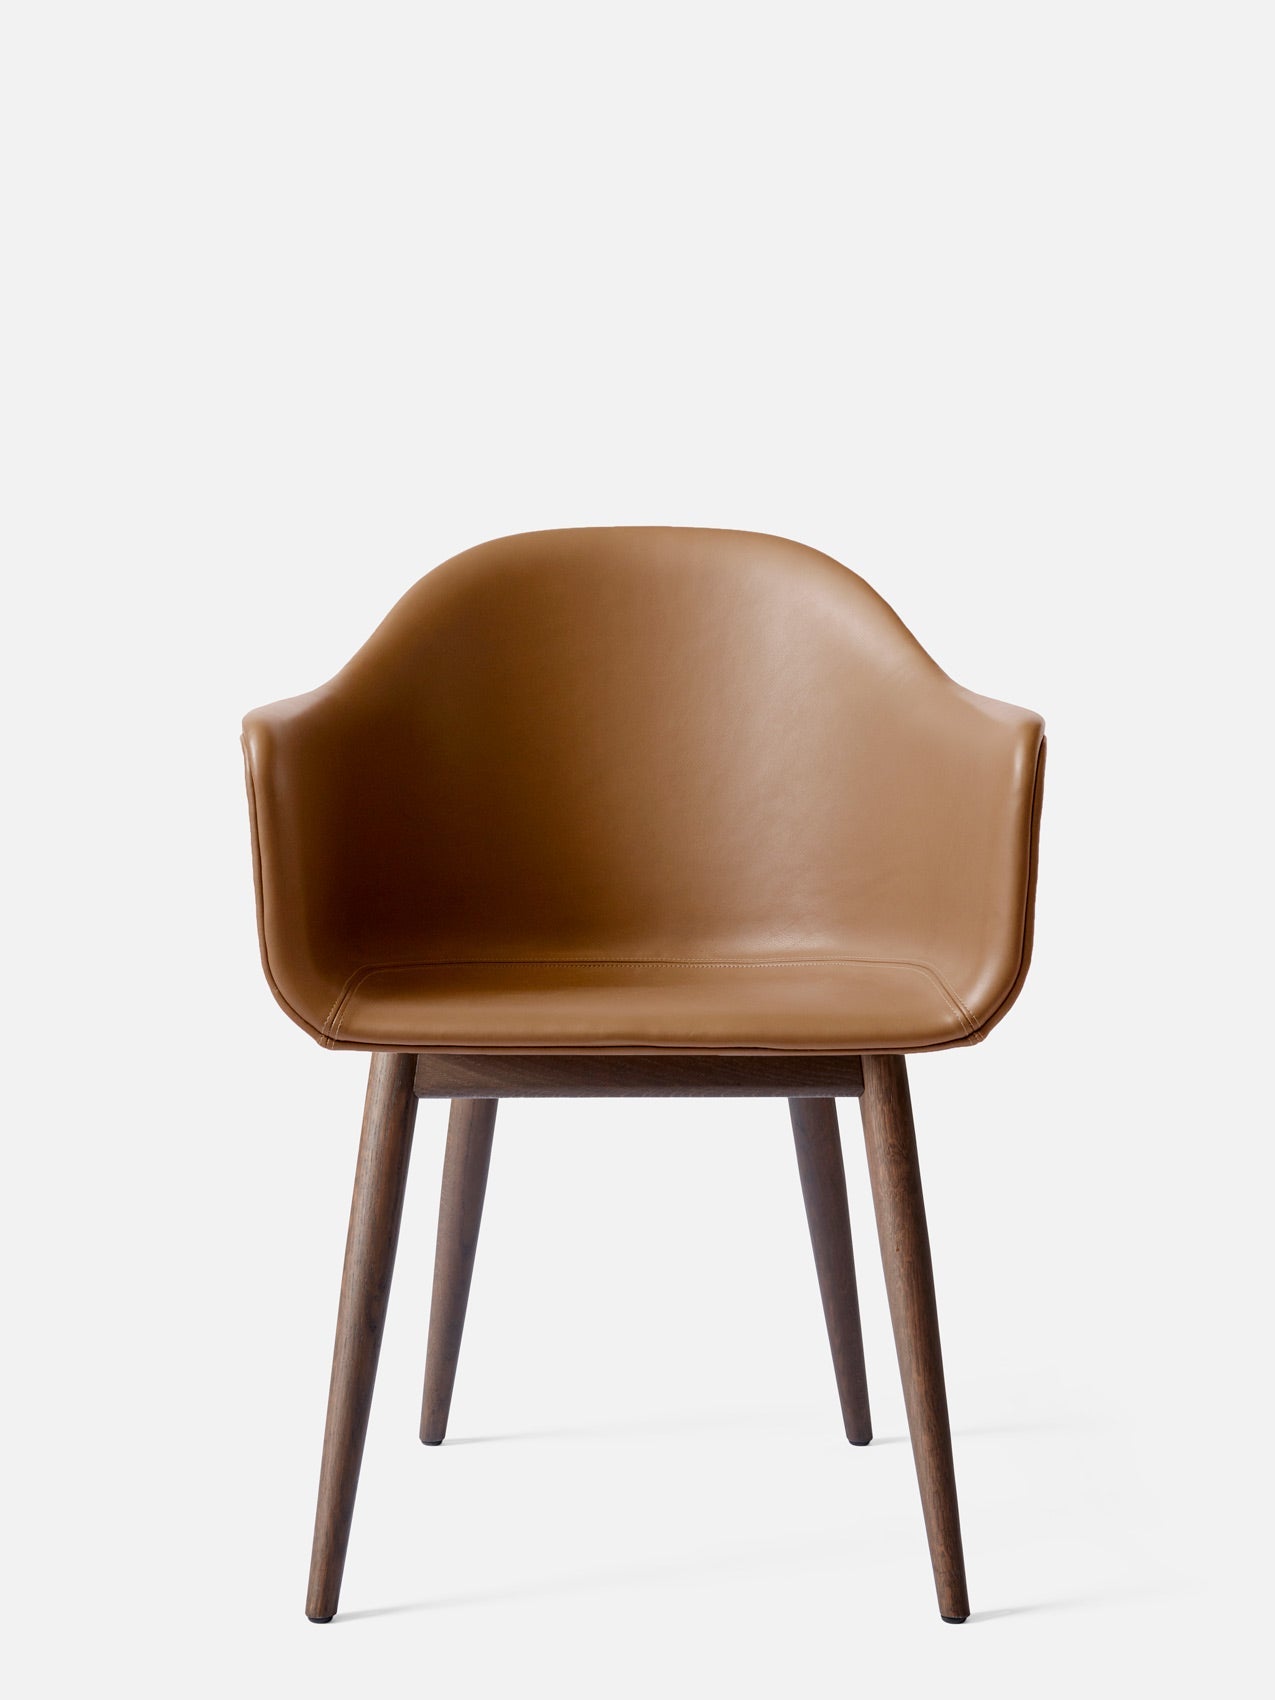 Harbour Arm Chair, Upholstered-Chair-Norm Architects-Dark Oak-0250 Cognac/Dakar-menu-minimalist-modern-danish-design-home-decor